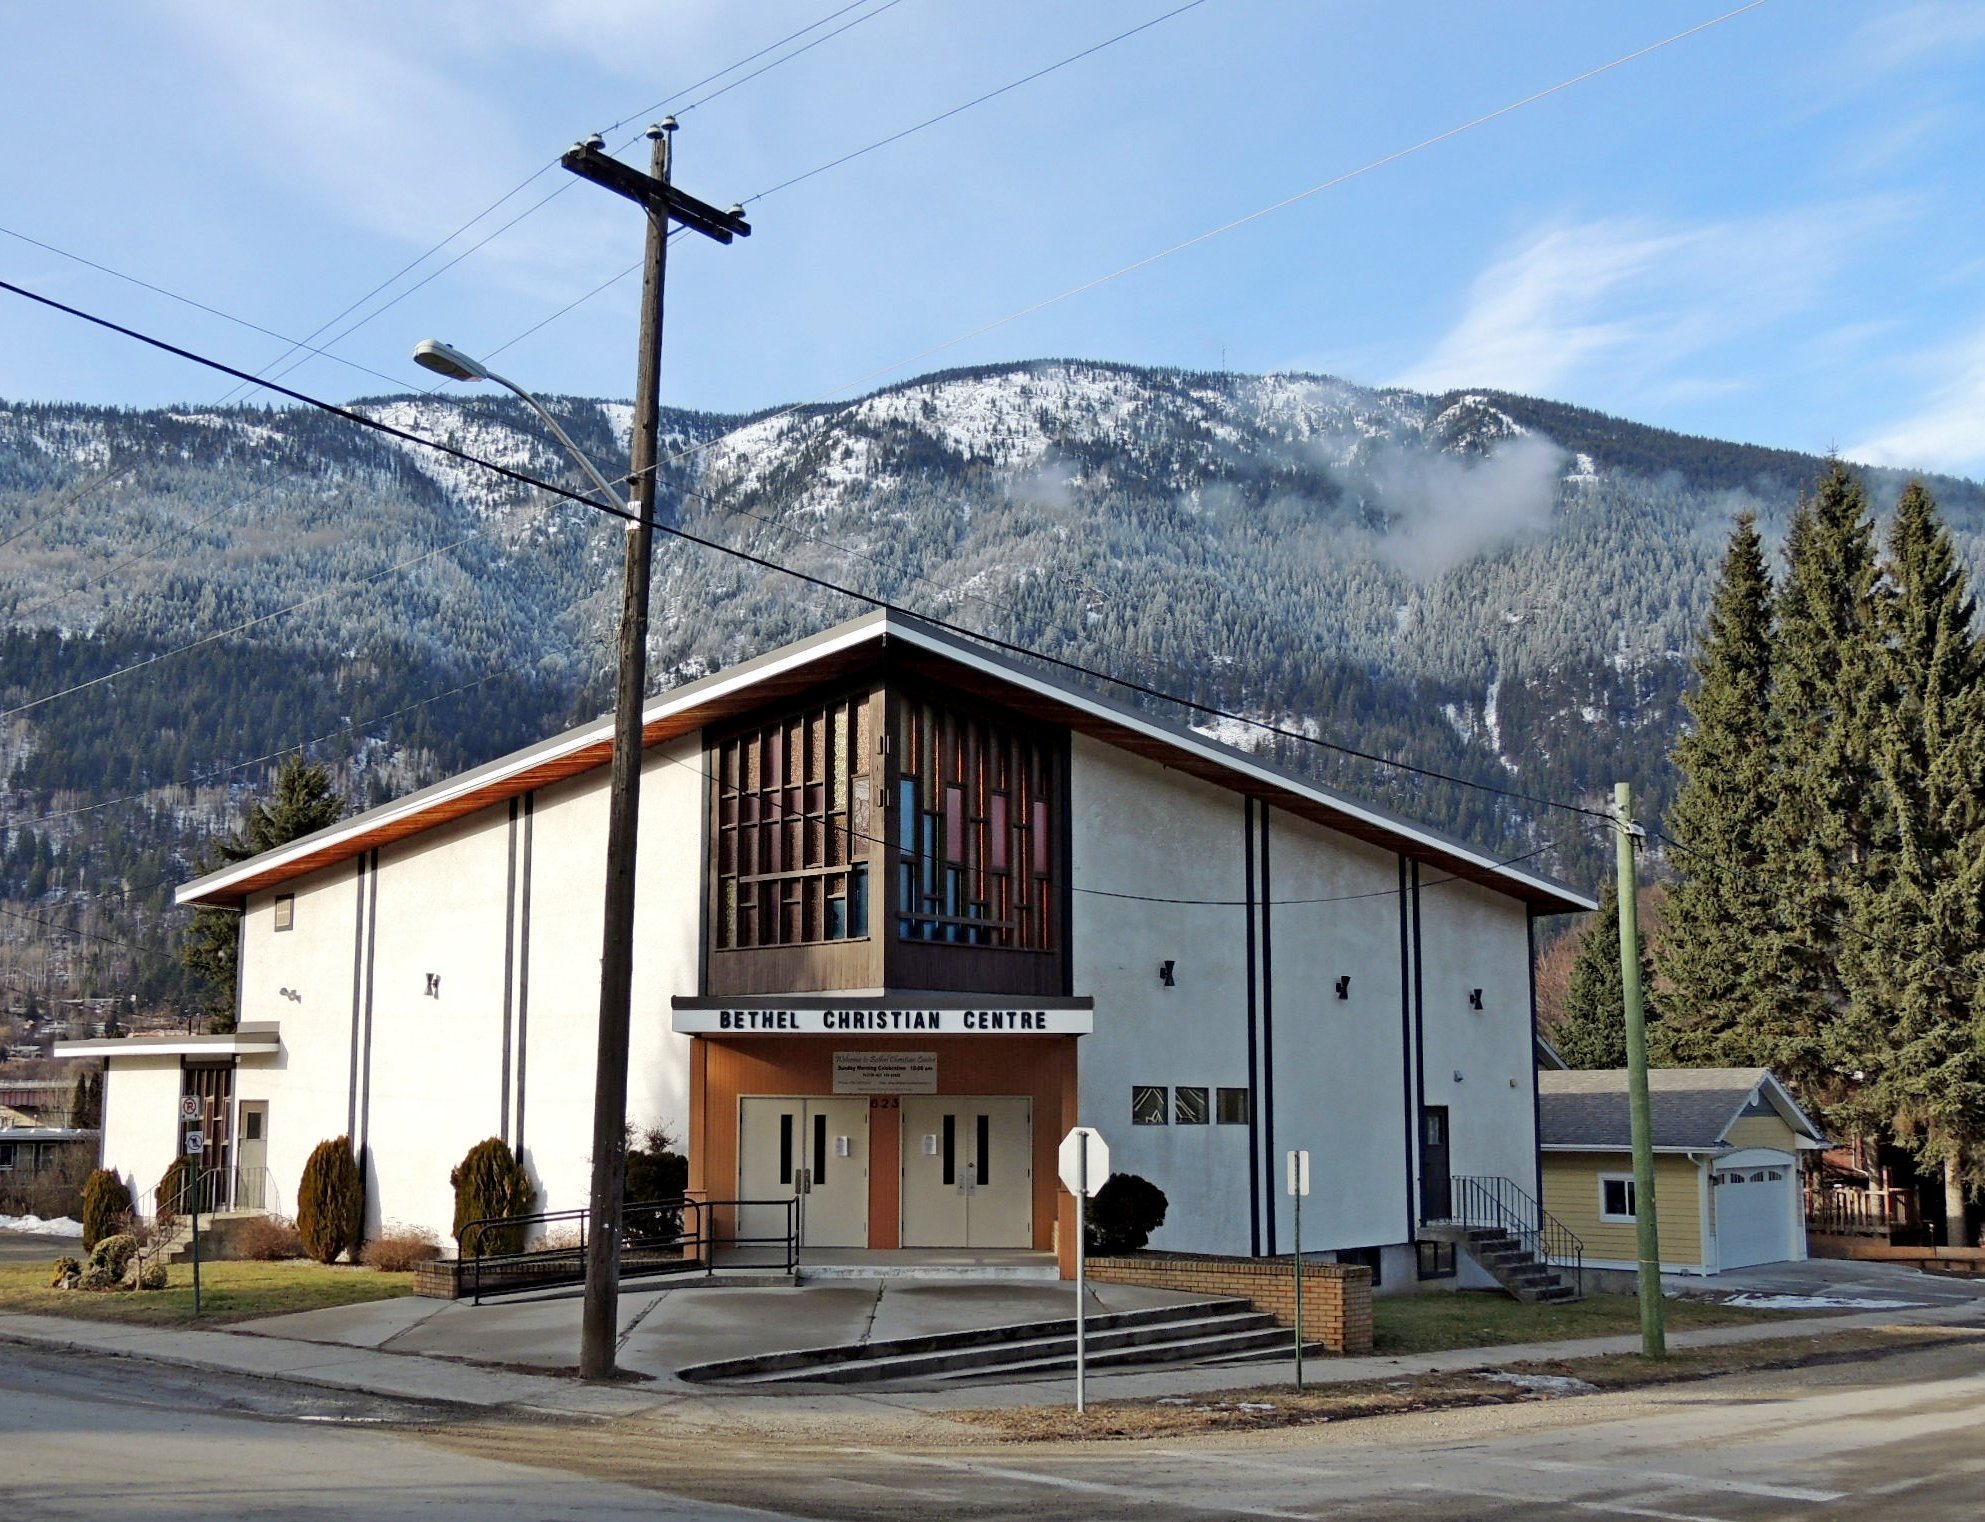 Bethel Christian Centre Nelson, BC Photo